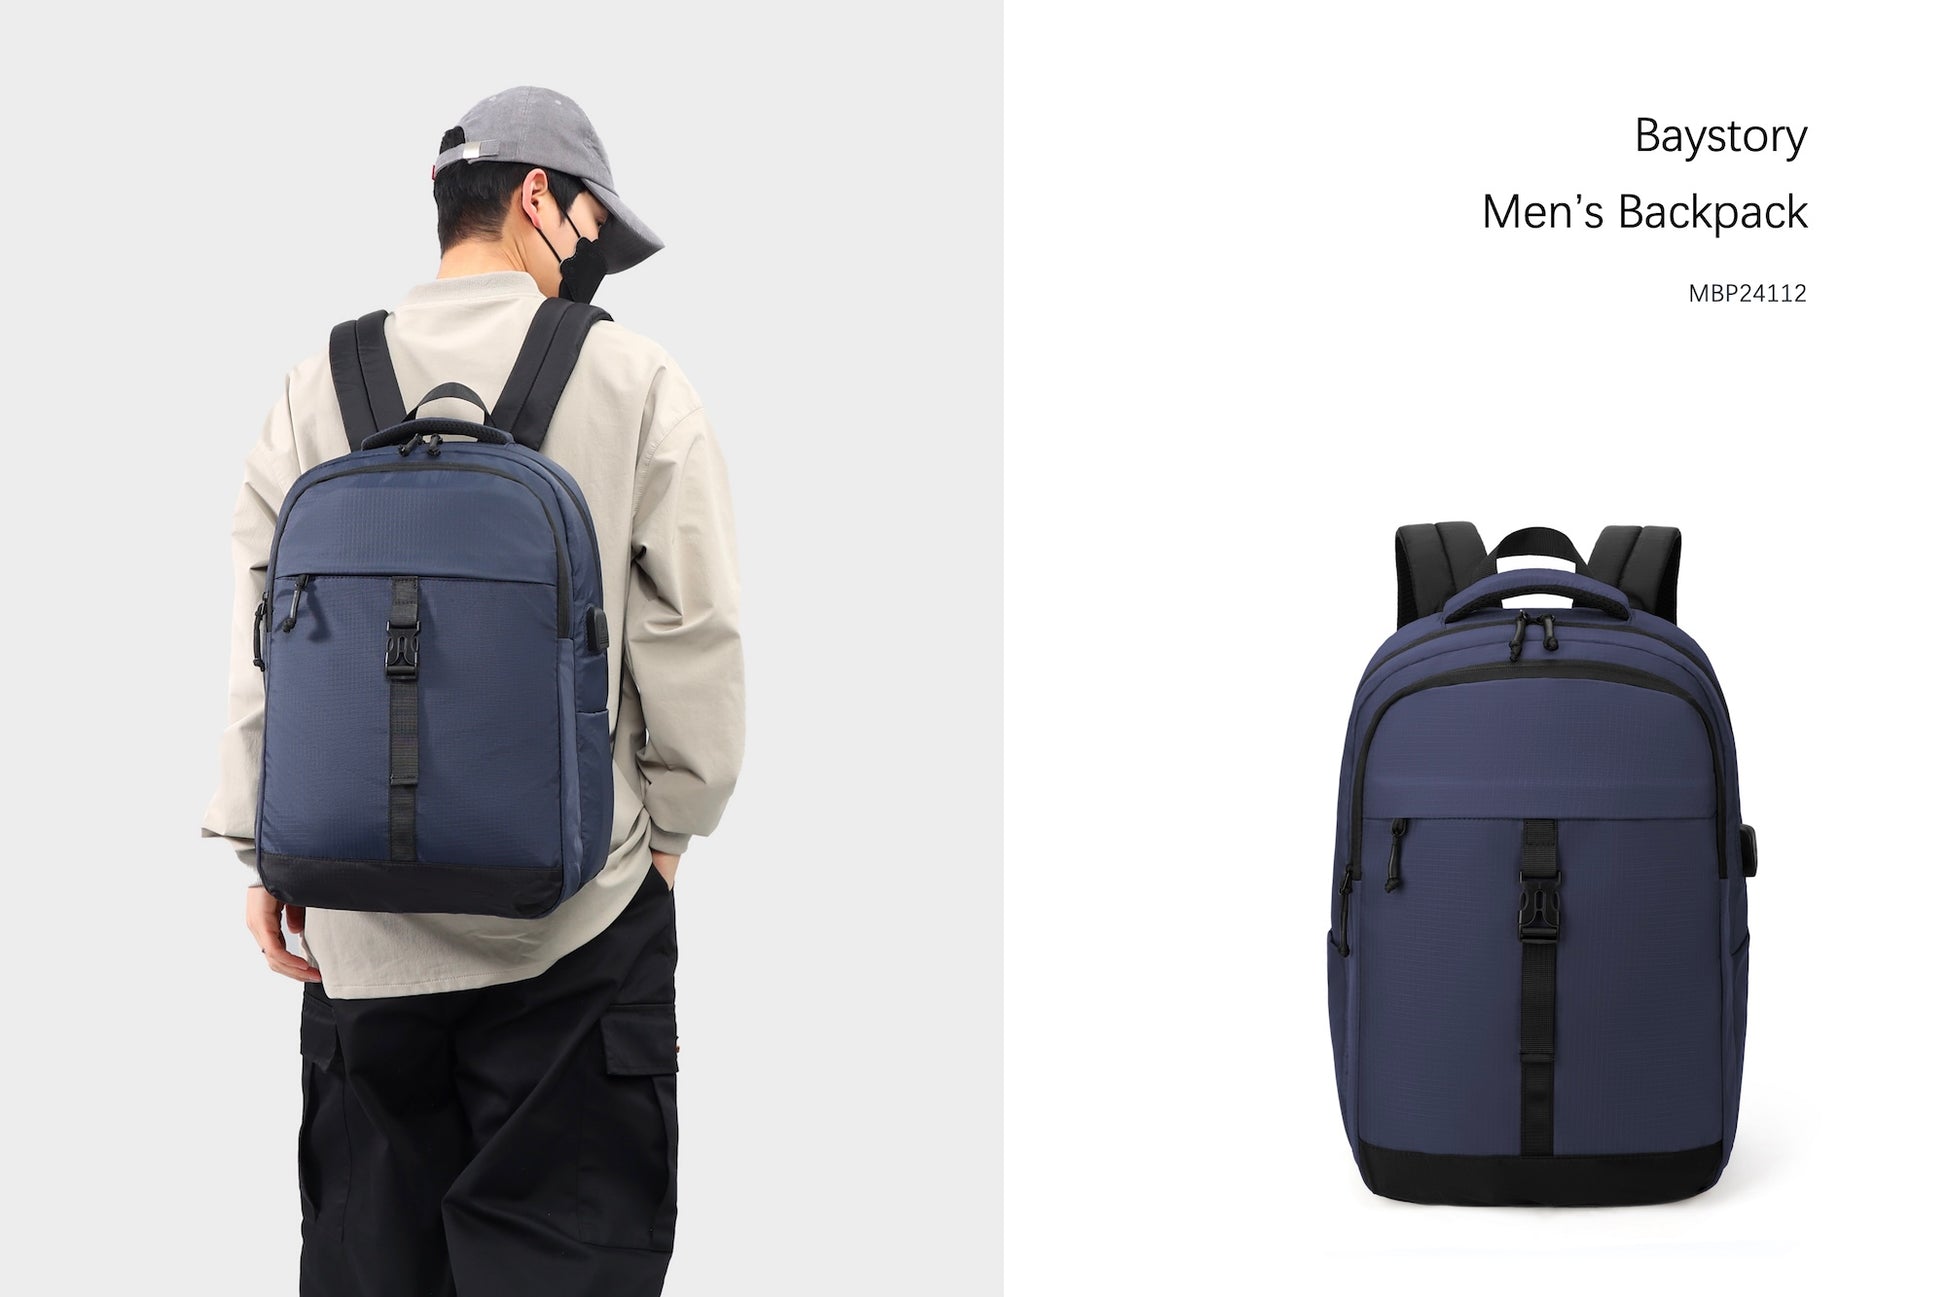 Men's Backpack MBP24112 - Baystory